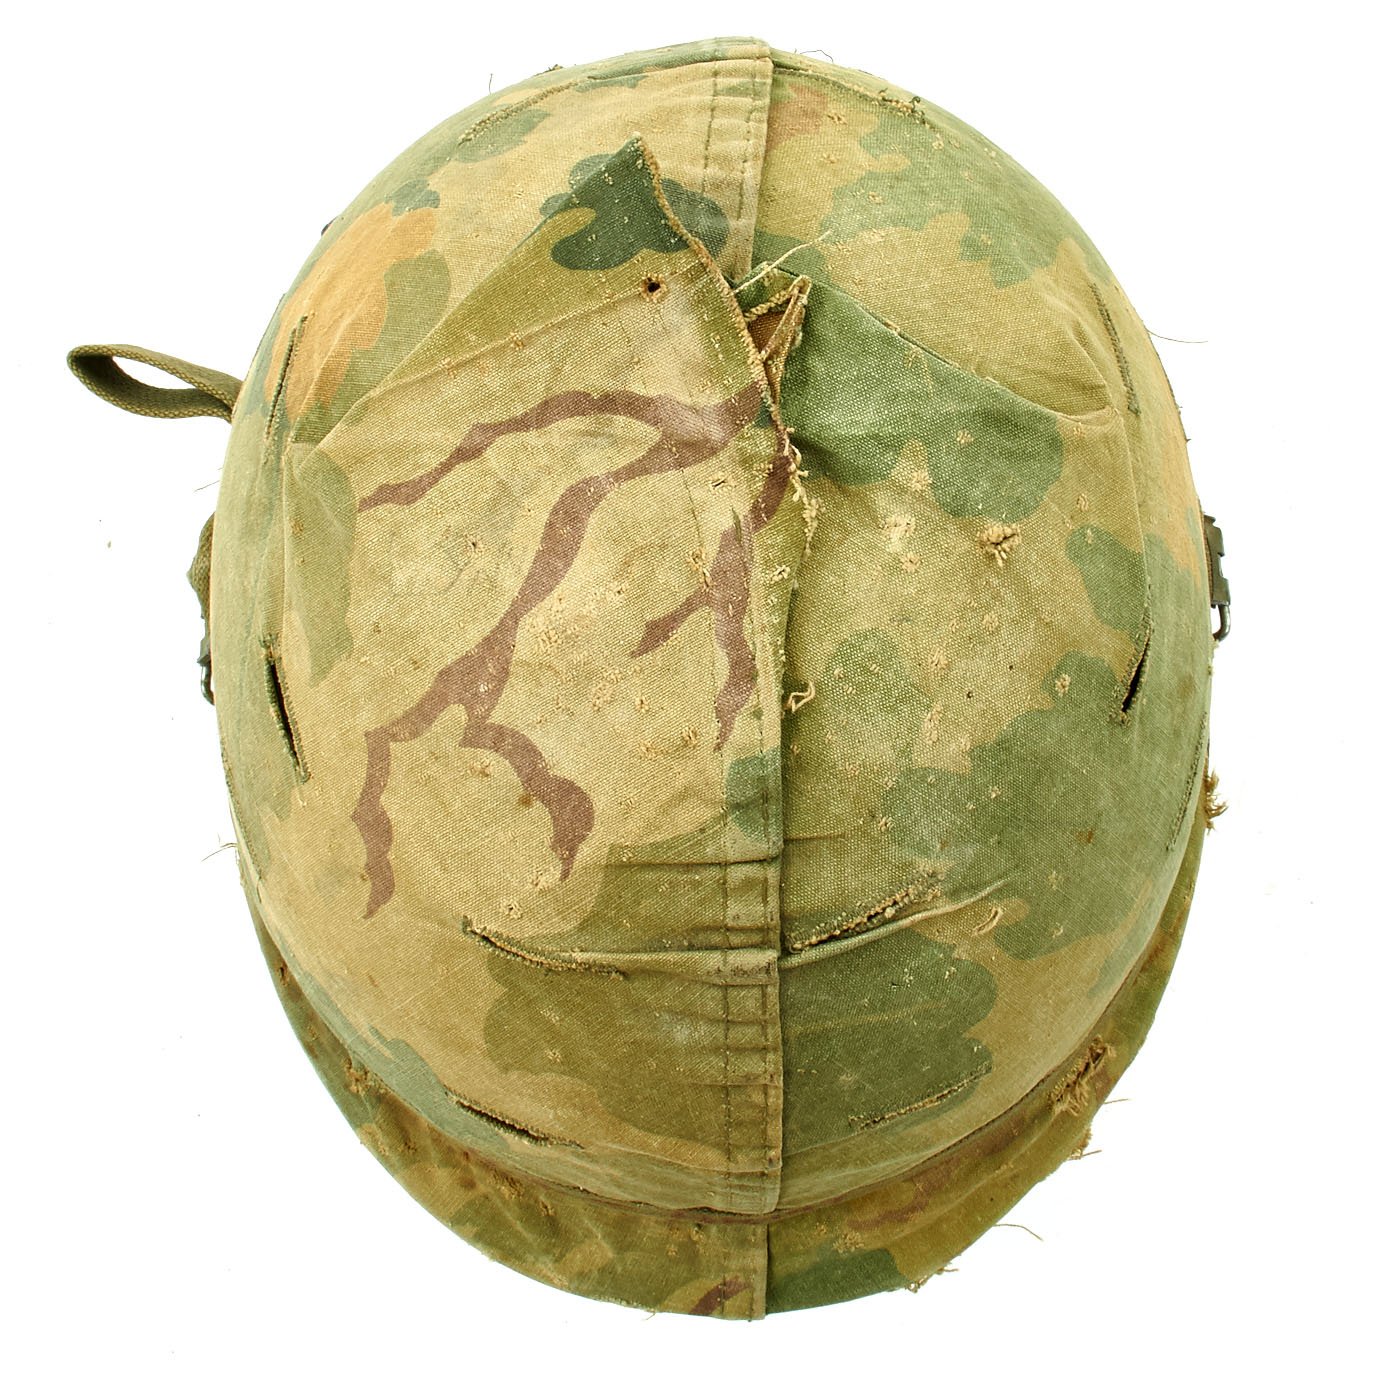 Original Us Vietnam War M1 Helmet With Usmc Reversible Camouflage Co